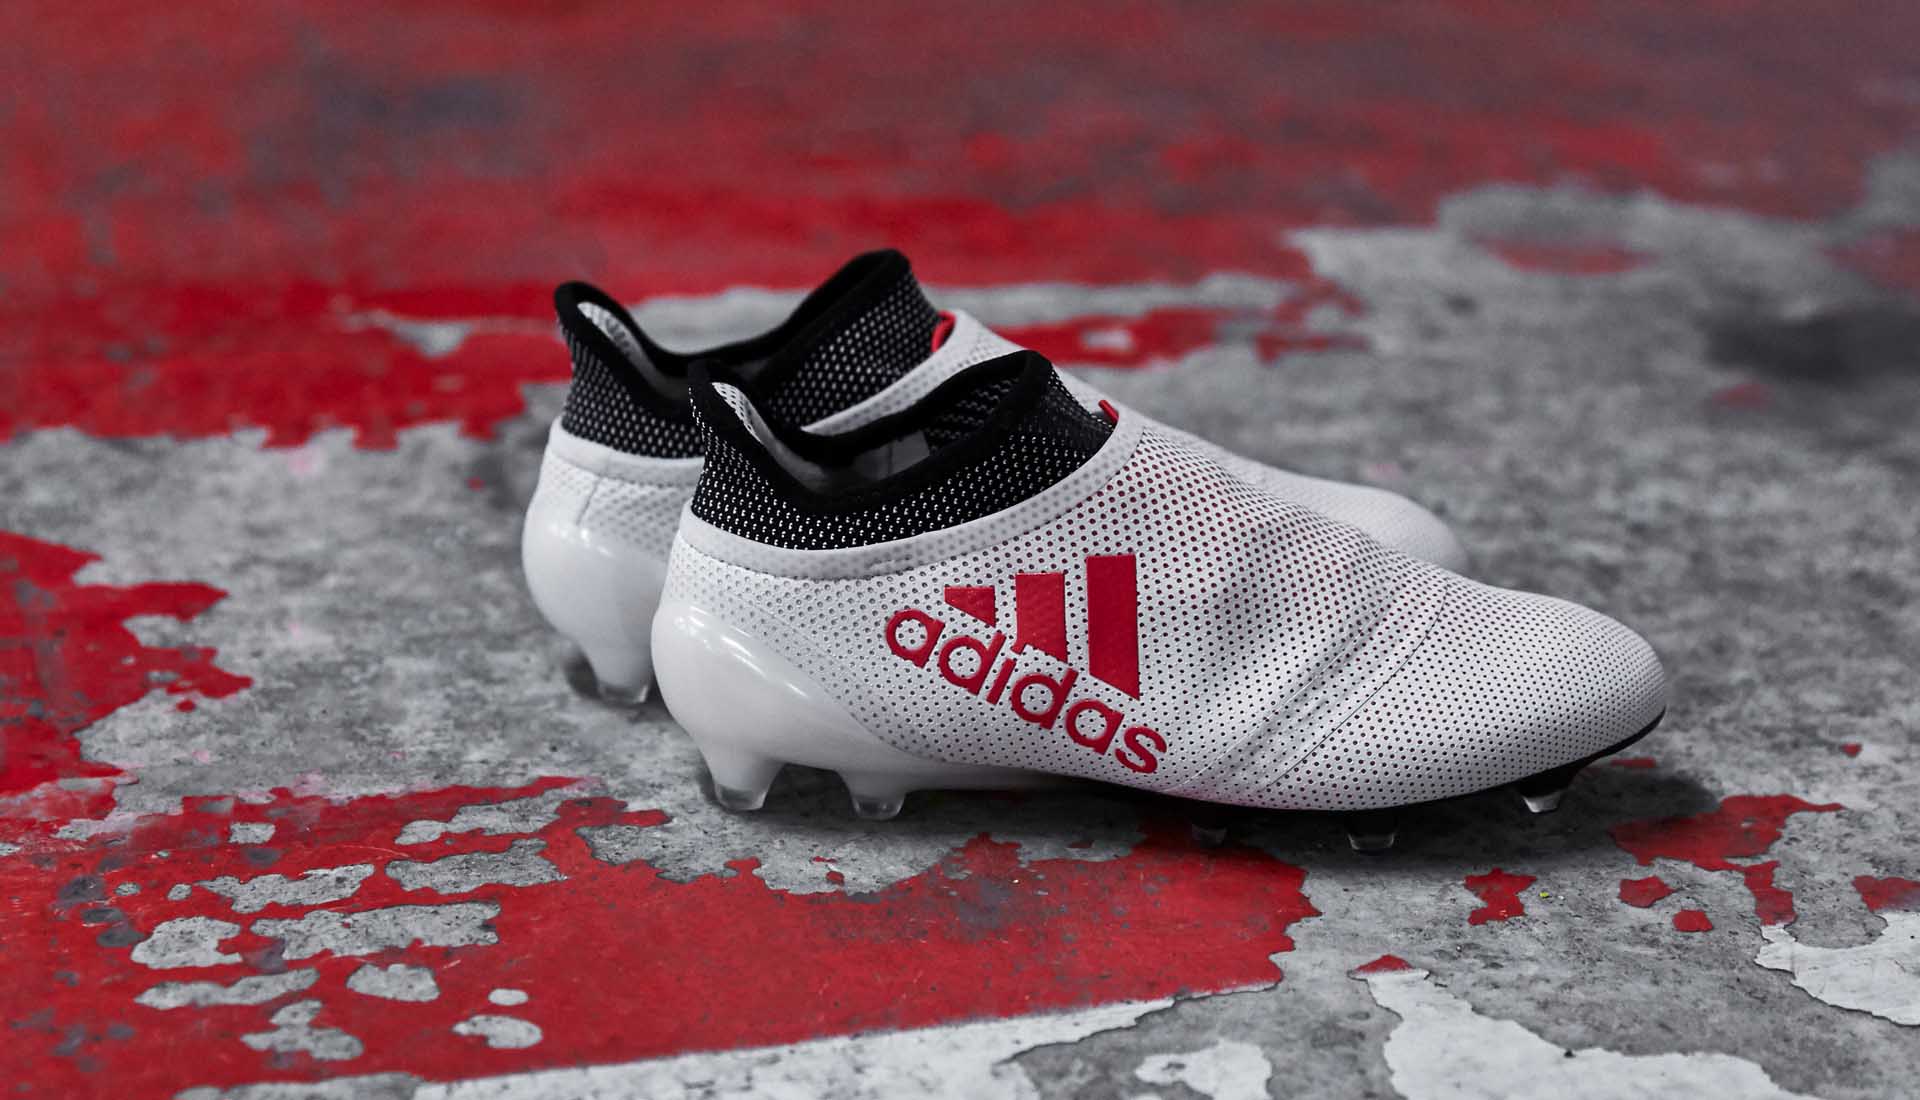 ijsje native Overleving adidas lanceert wit rode adidas X17 Cold Blooded voetbalschoenen -  Voetbal-schoenen.eu